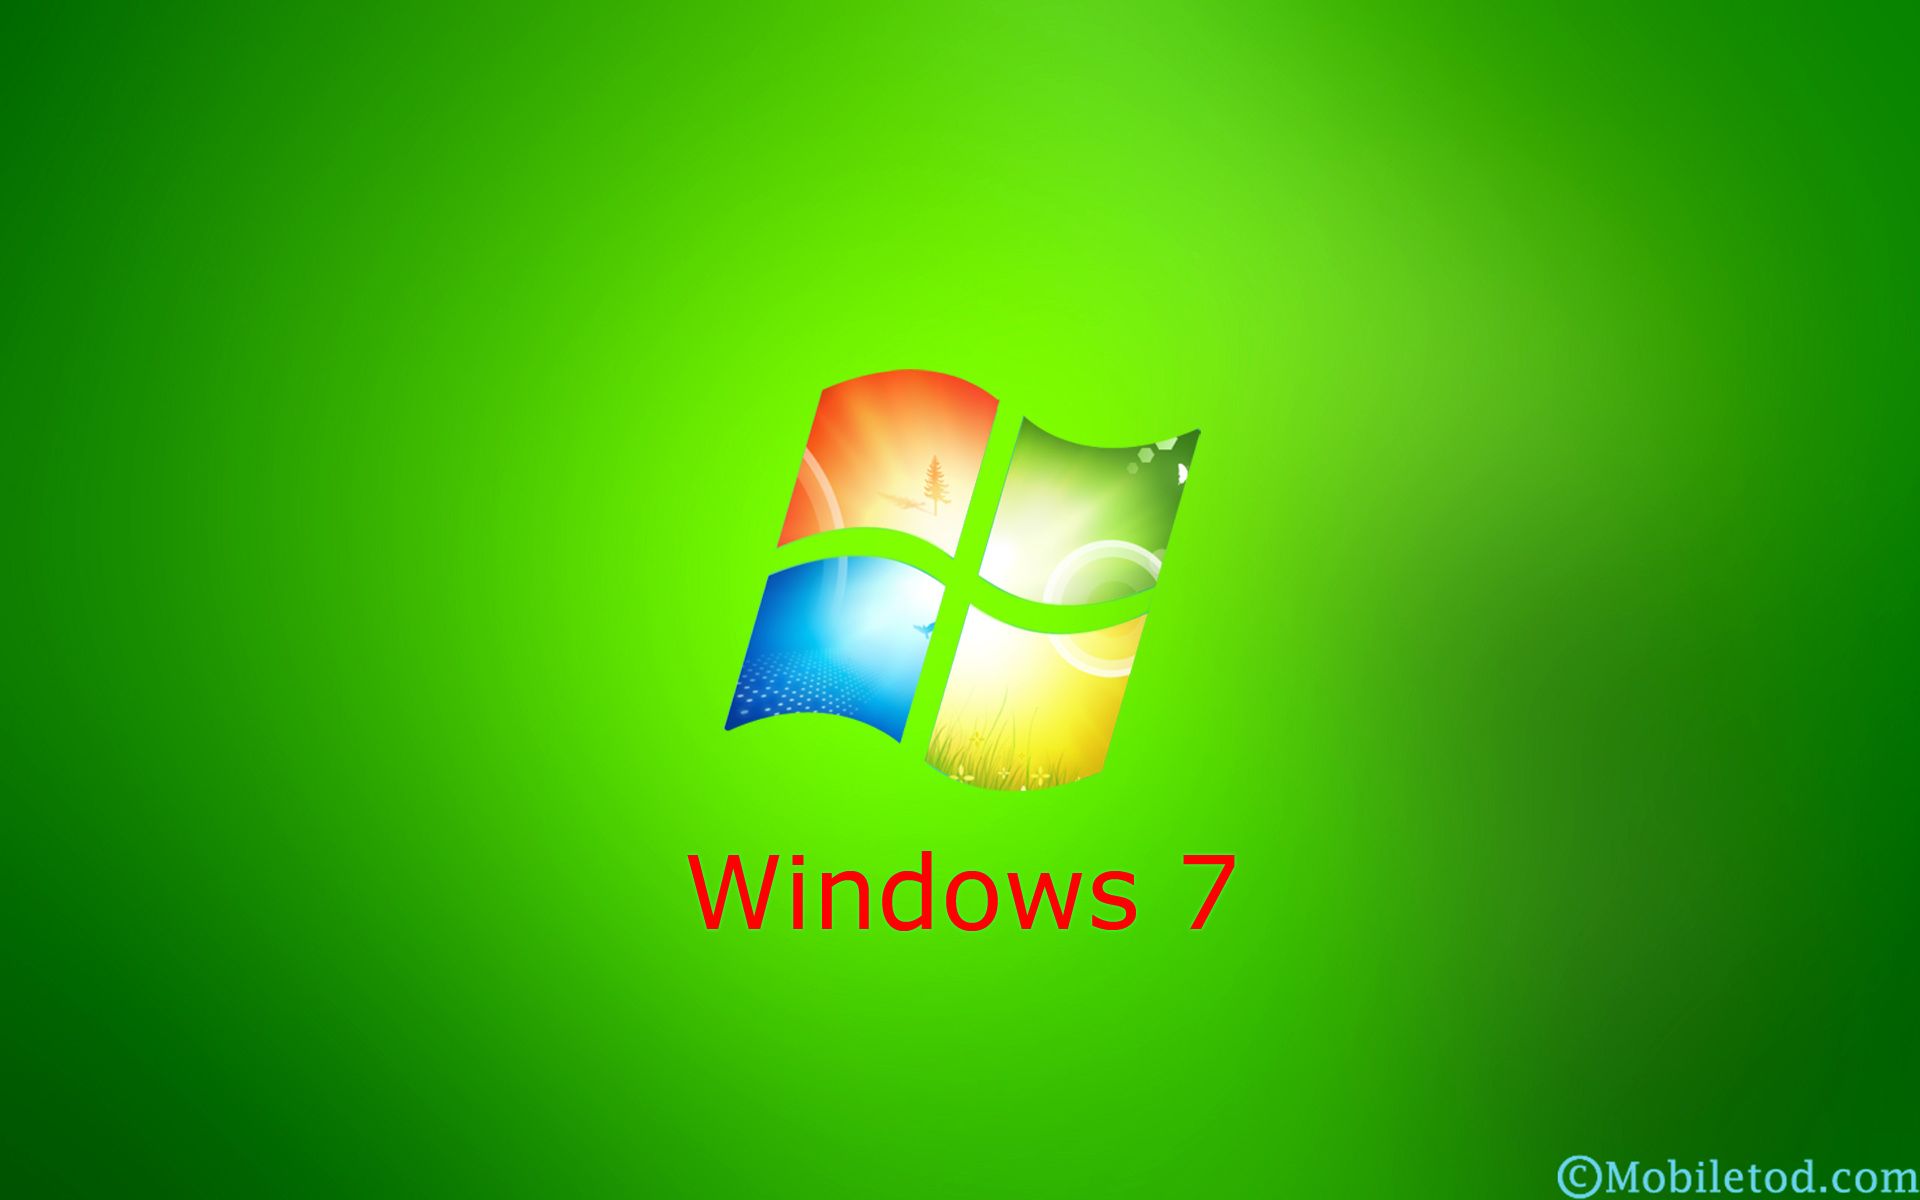 Windows 7 default wallpapers hd wallpapers inn | ImgStocks.com